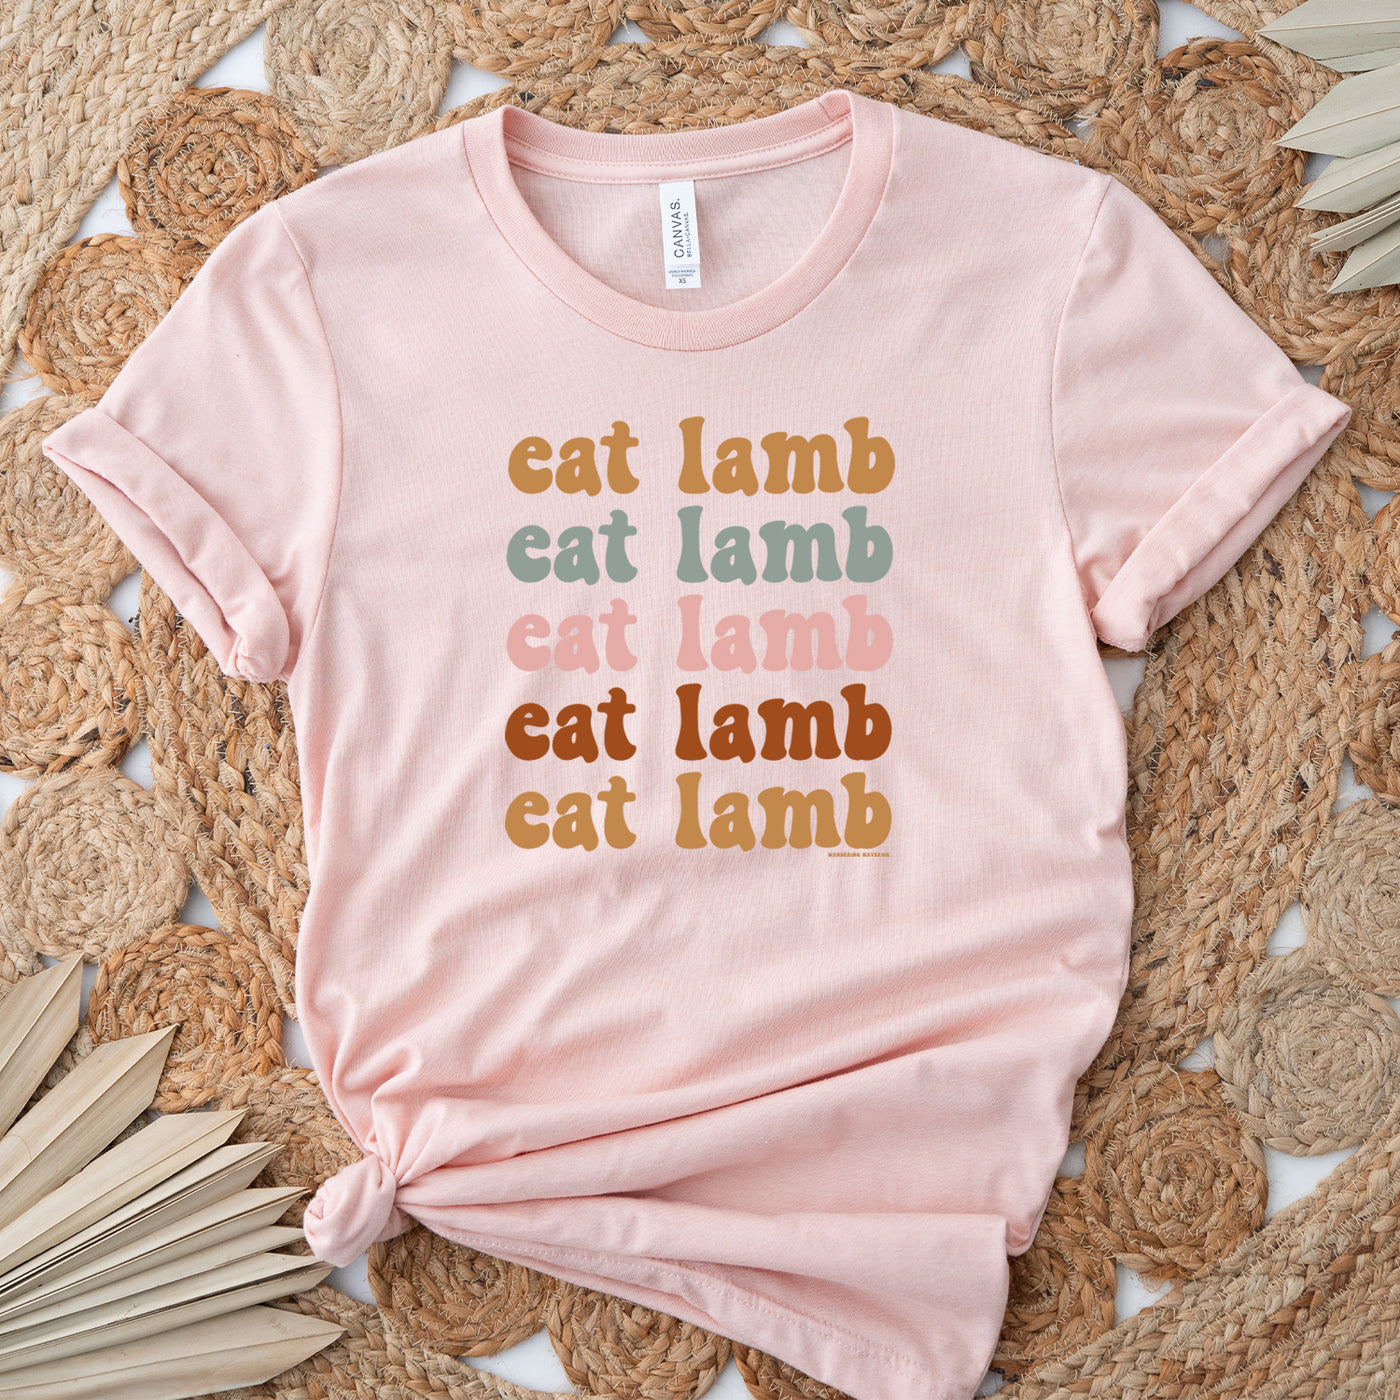 Groovy Eat Lamb T-Shirt (XS-4XL) - Multiple Colors!